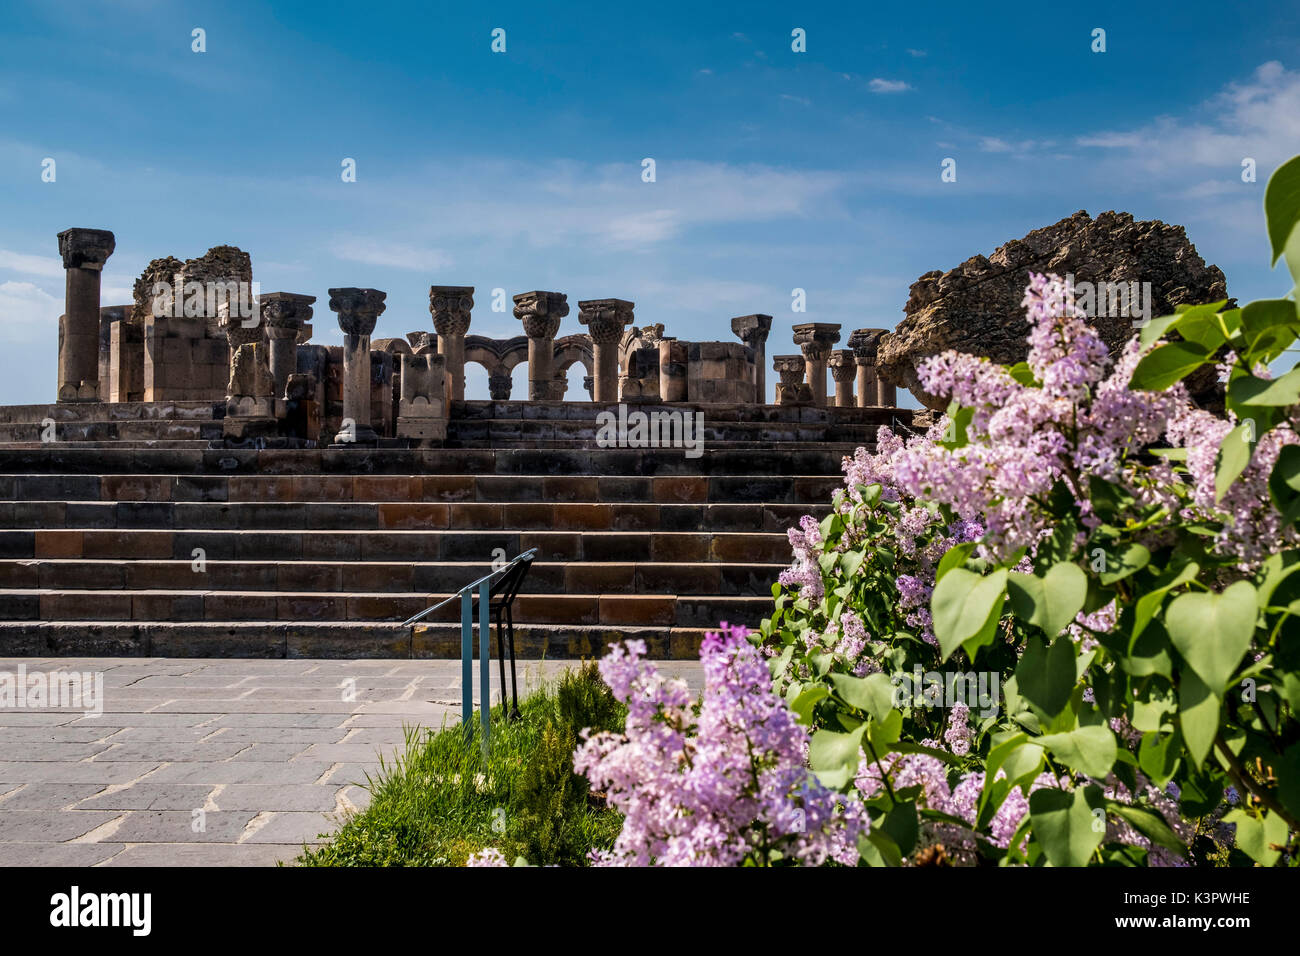 The ruins of the ancient temple of Zvartnots, Armenia, Caucaus, Eurasia Stock Photo